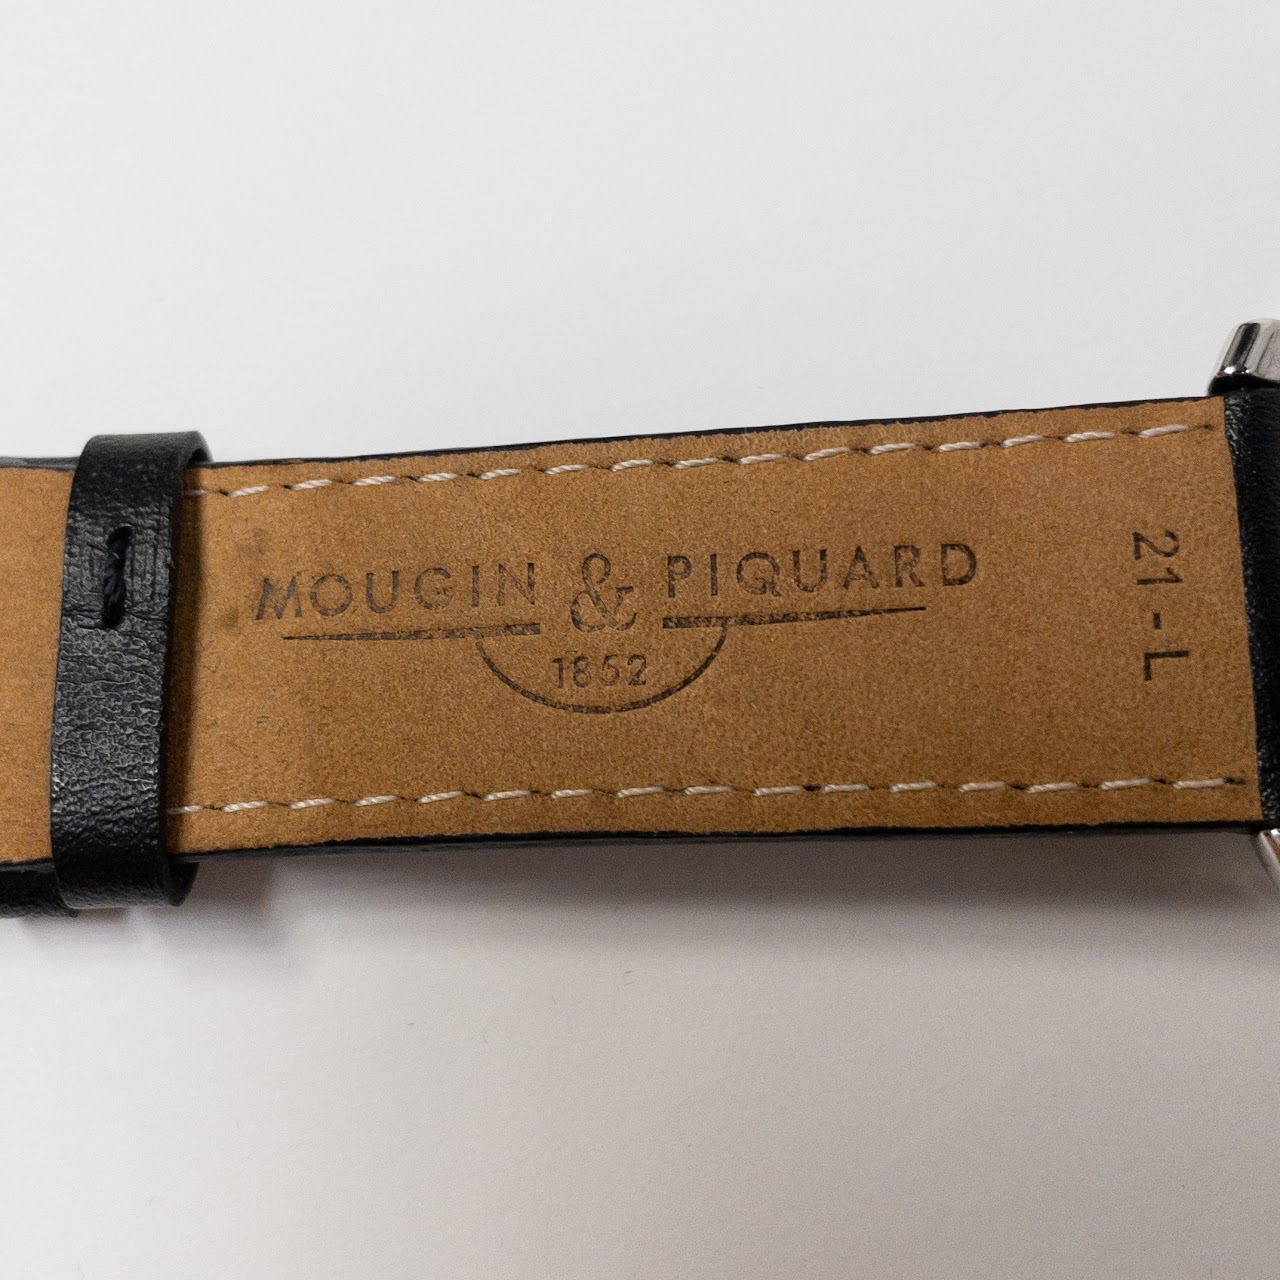 Mougin & Piquard for J. Crew Grande Seconde Wristwatch